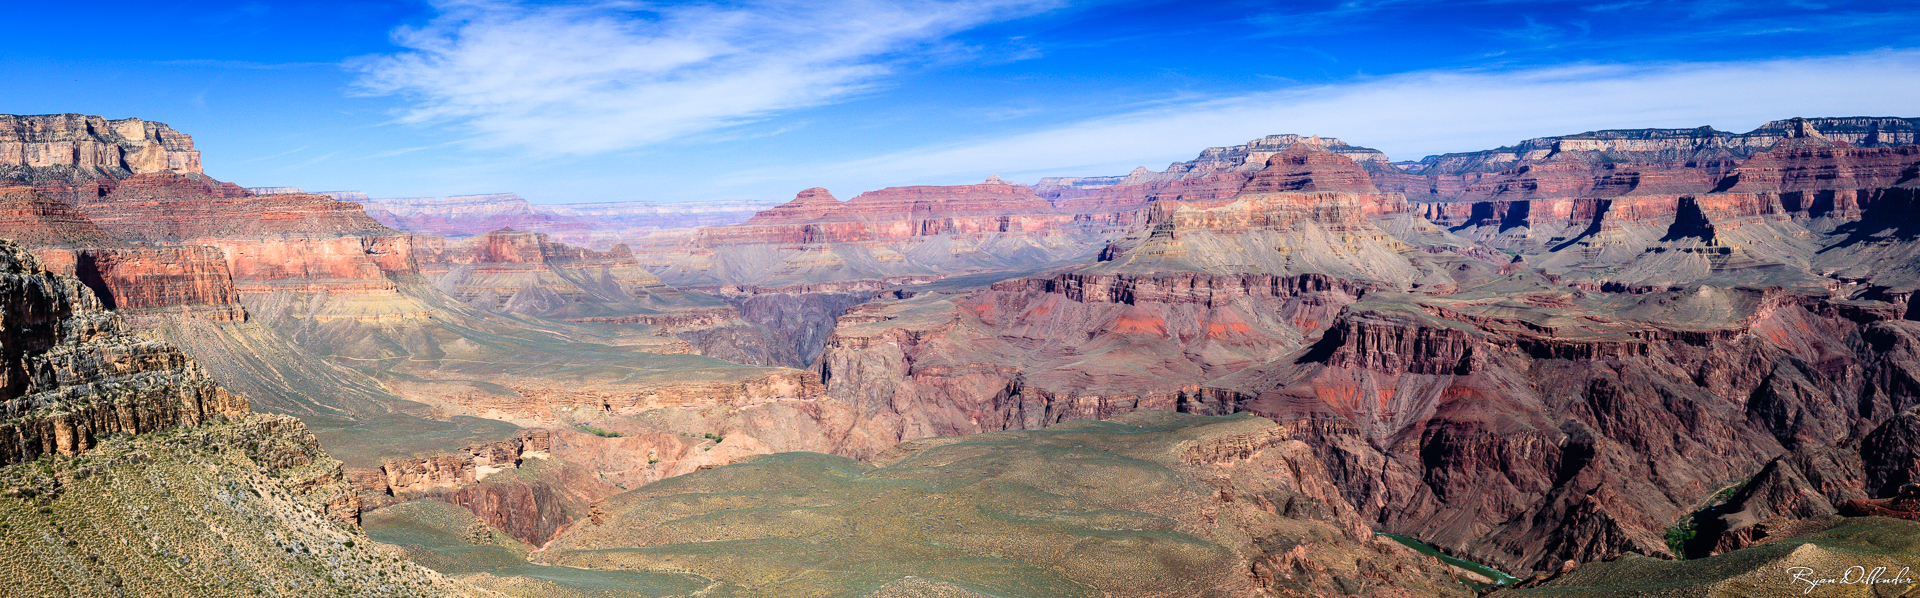 Grand Canyon.jpg